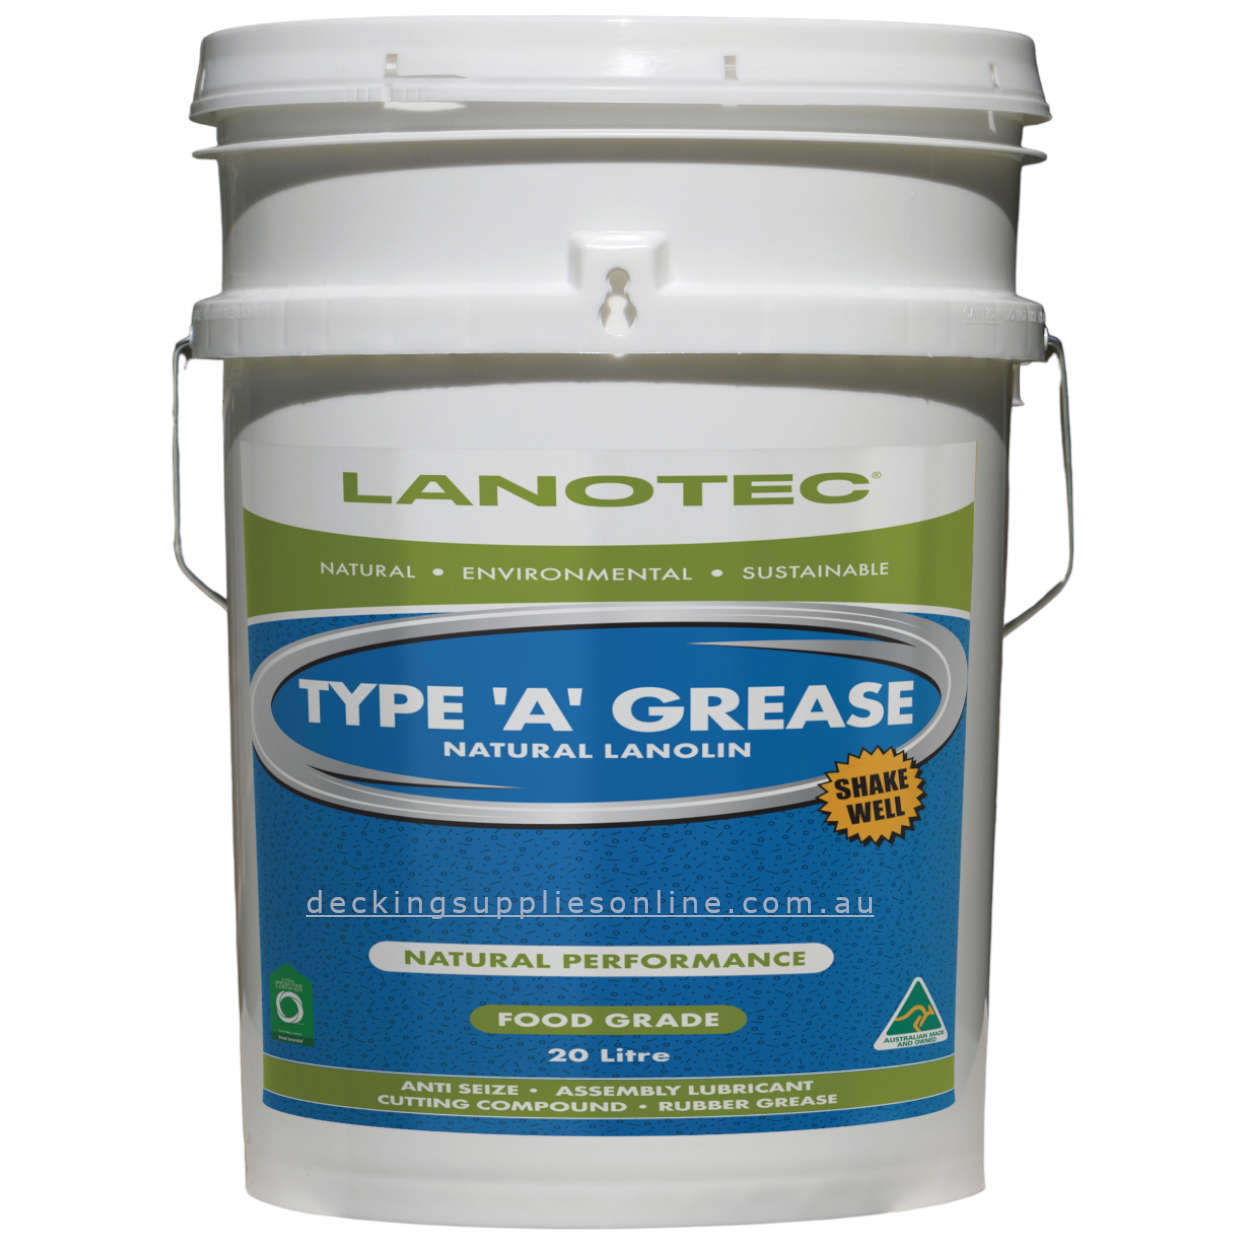 Lanotec_Type_A_Grease_20_Litre_Decking_Supplies_Online